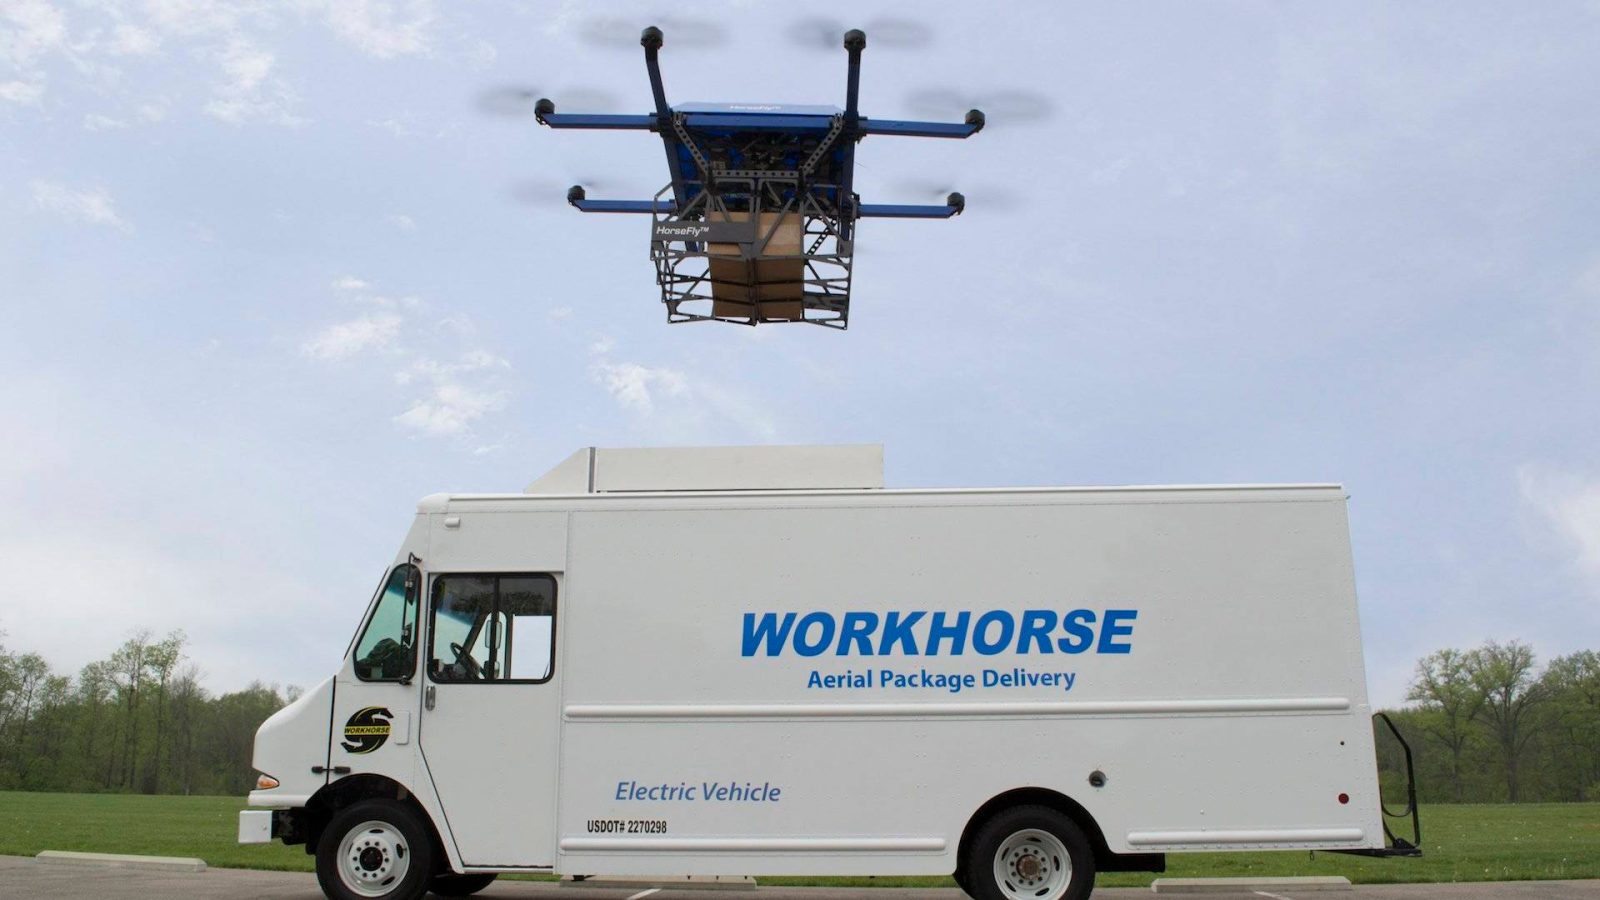 Workhorse starts autonomous drone delivery program HorseFly in Ohio